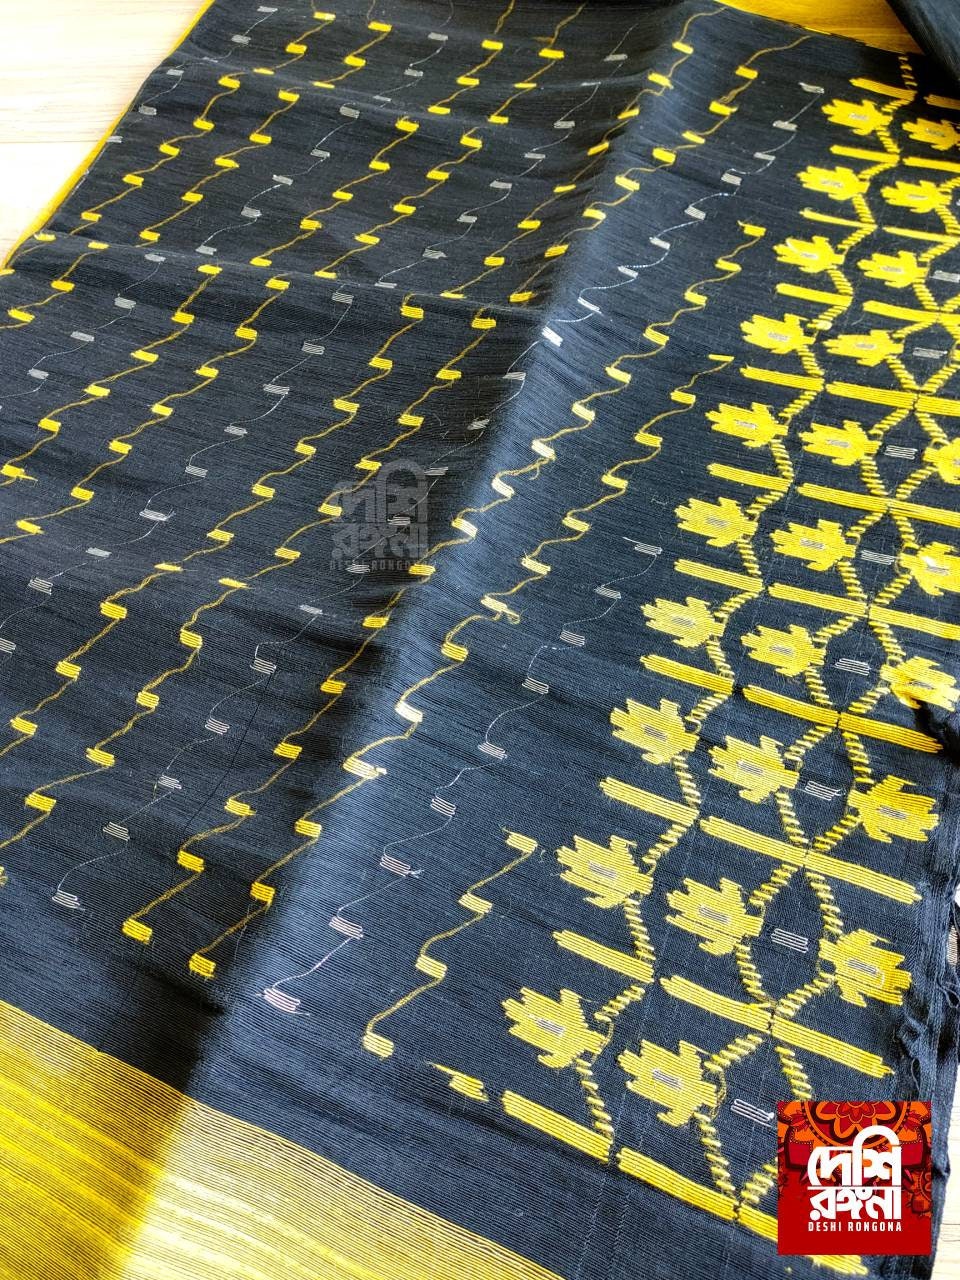 Exclusive Dhakai Jamdani Saree Black/Yellow Contrast Work, Handloom Jamdani 64 count threaded, Traditional,Elegant, Classy Saree